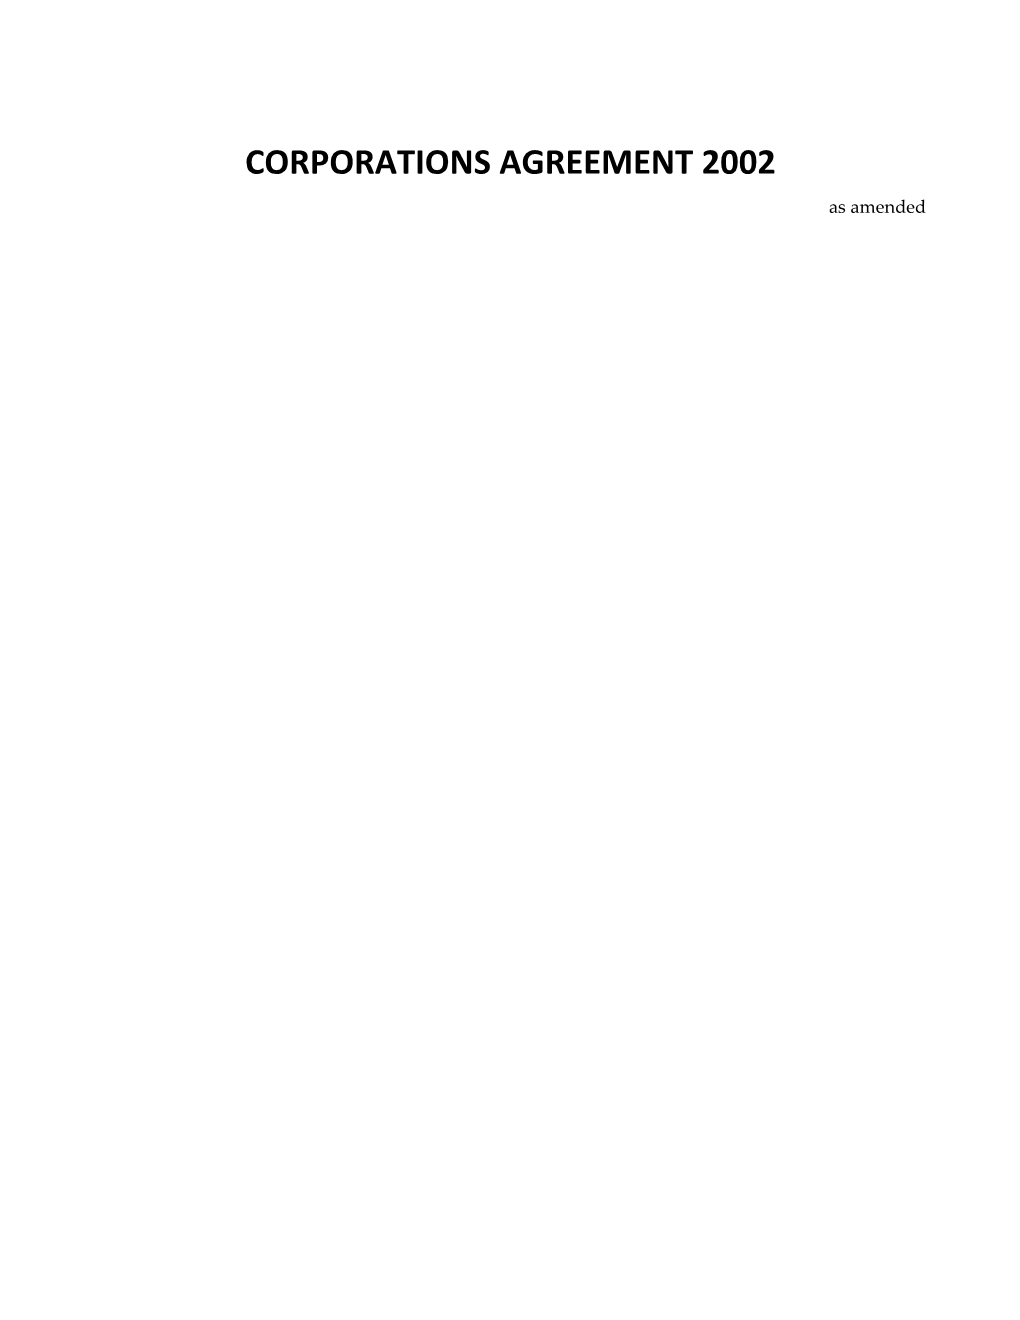 Corporations Agreement 2002